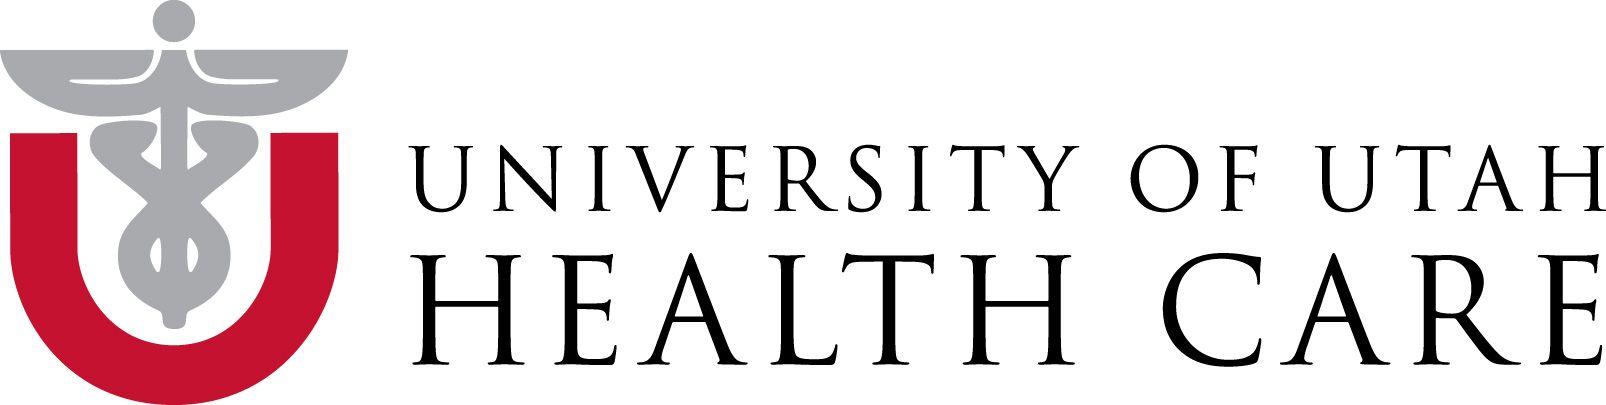 U of U Health Care Logo - Eccles Health Sciences Library Anniversary Celebration